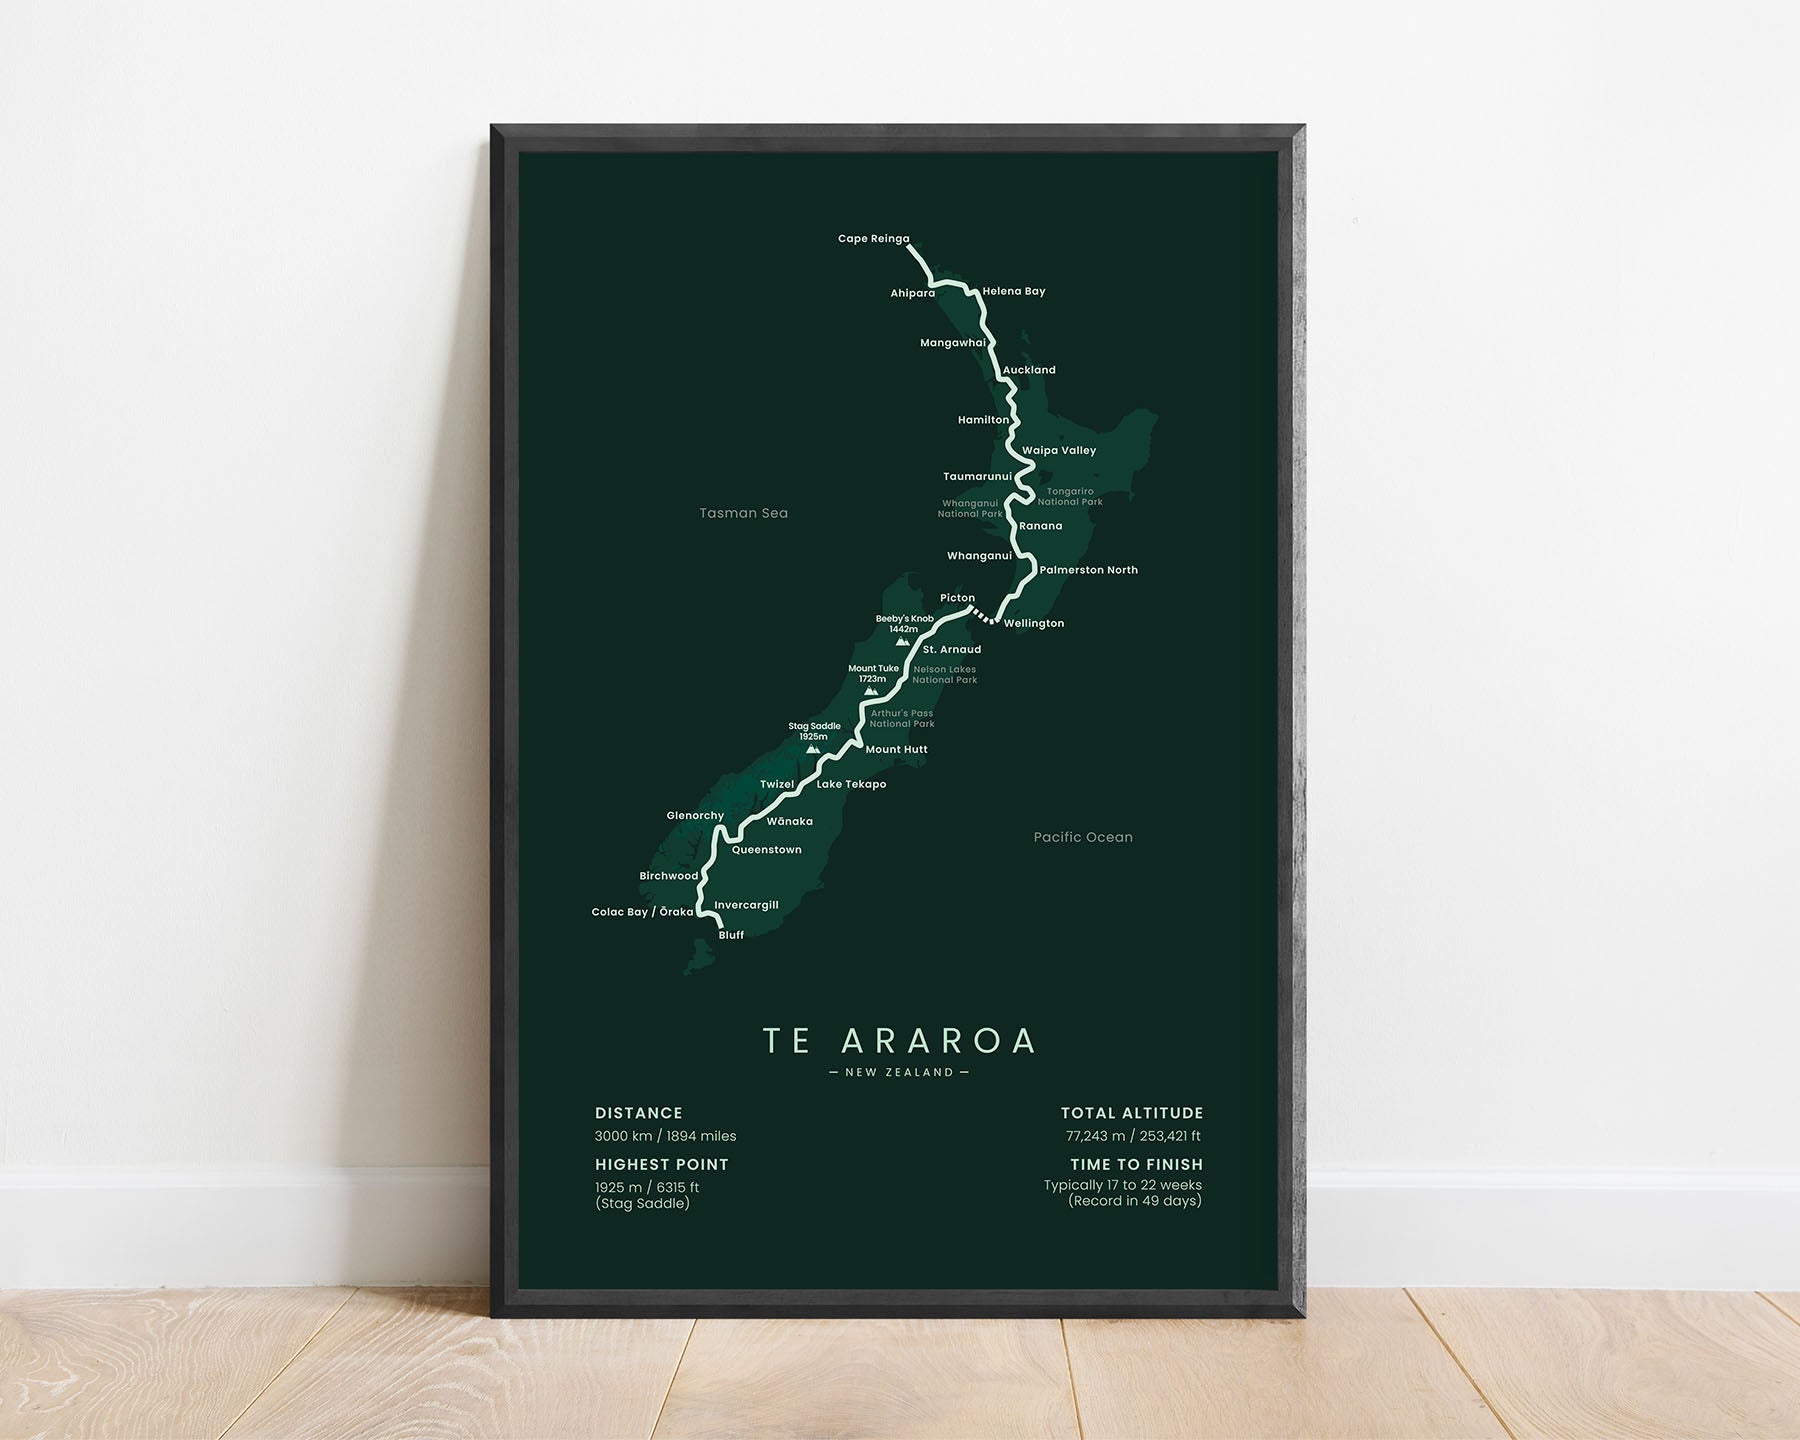 Te Araroa (New Zealand) Trek Wall Map with Green Background